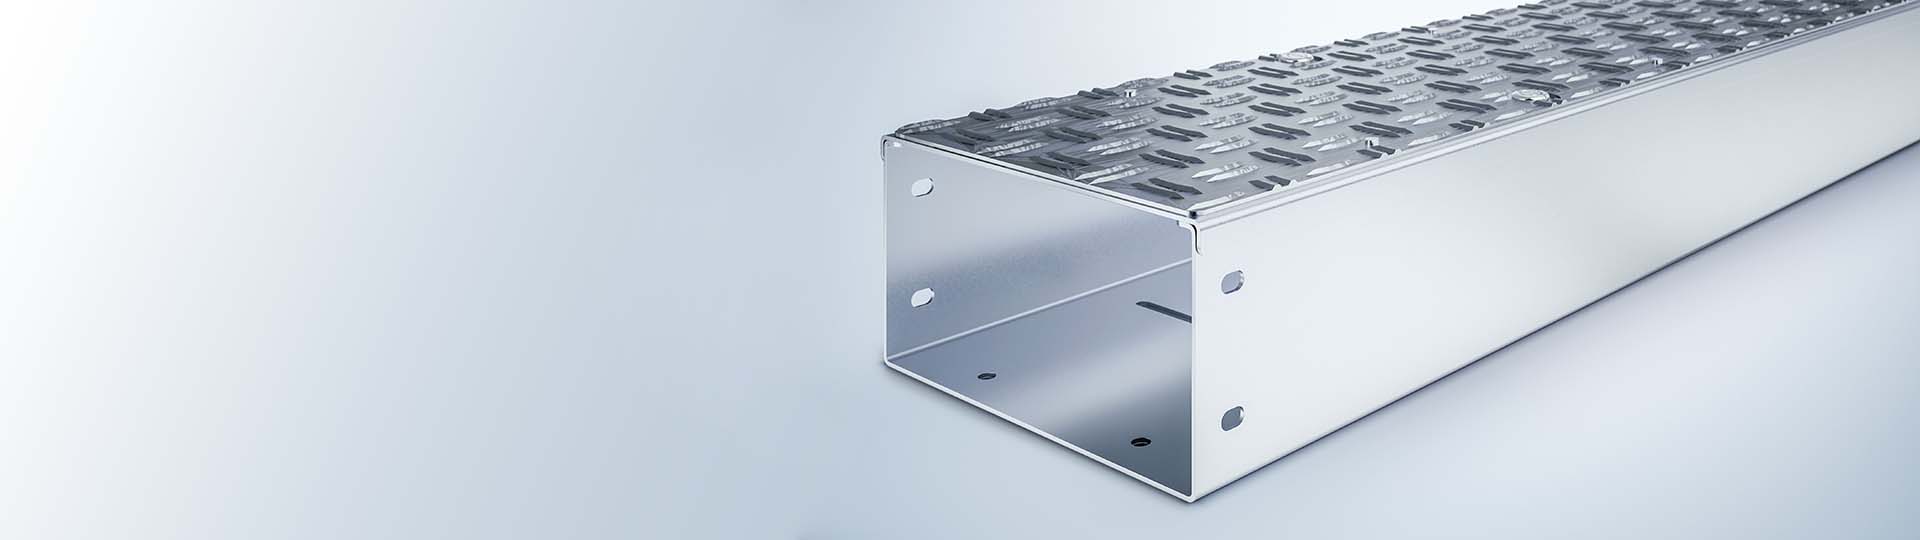 Cabling trunking - PFLITSCH GmbH & Co. KG - sheet steel / zinc-plated steel  / rigid